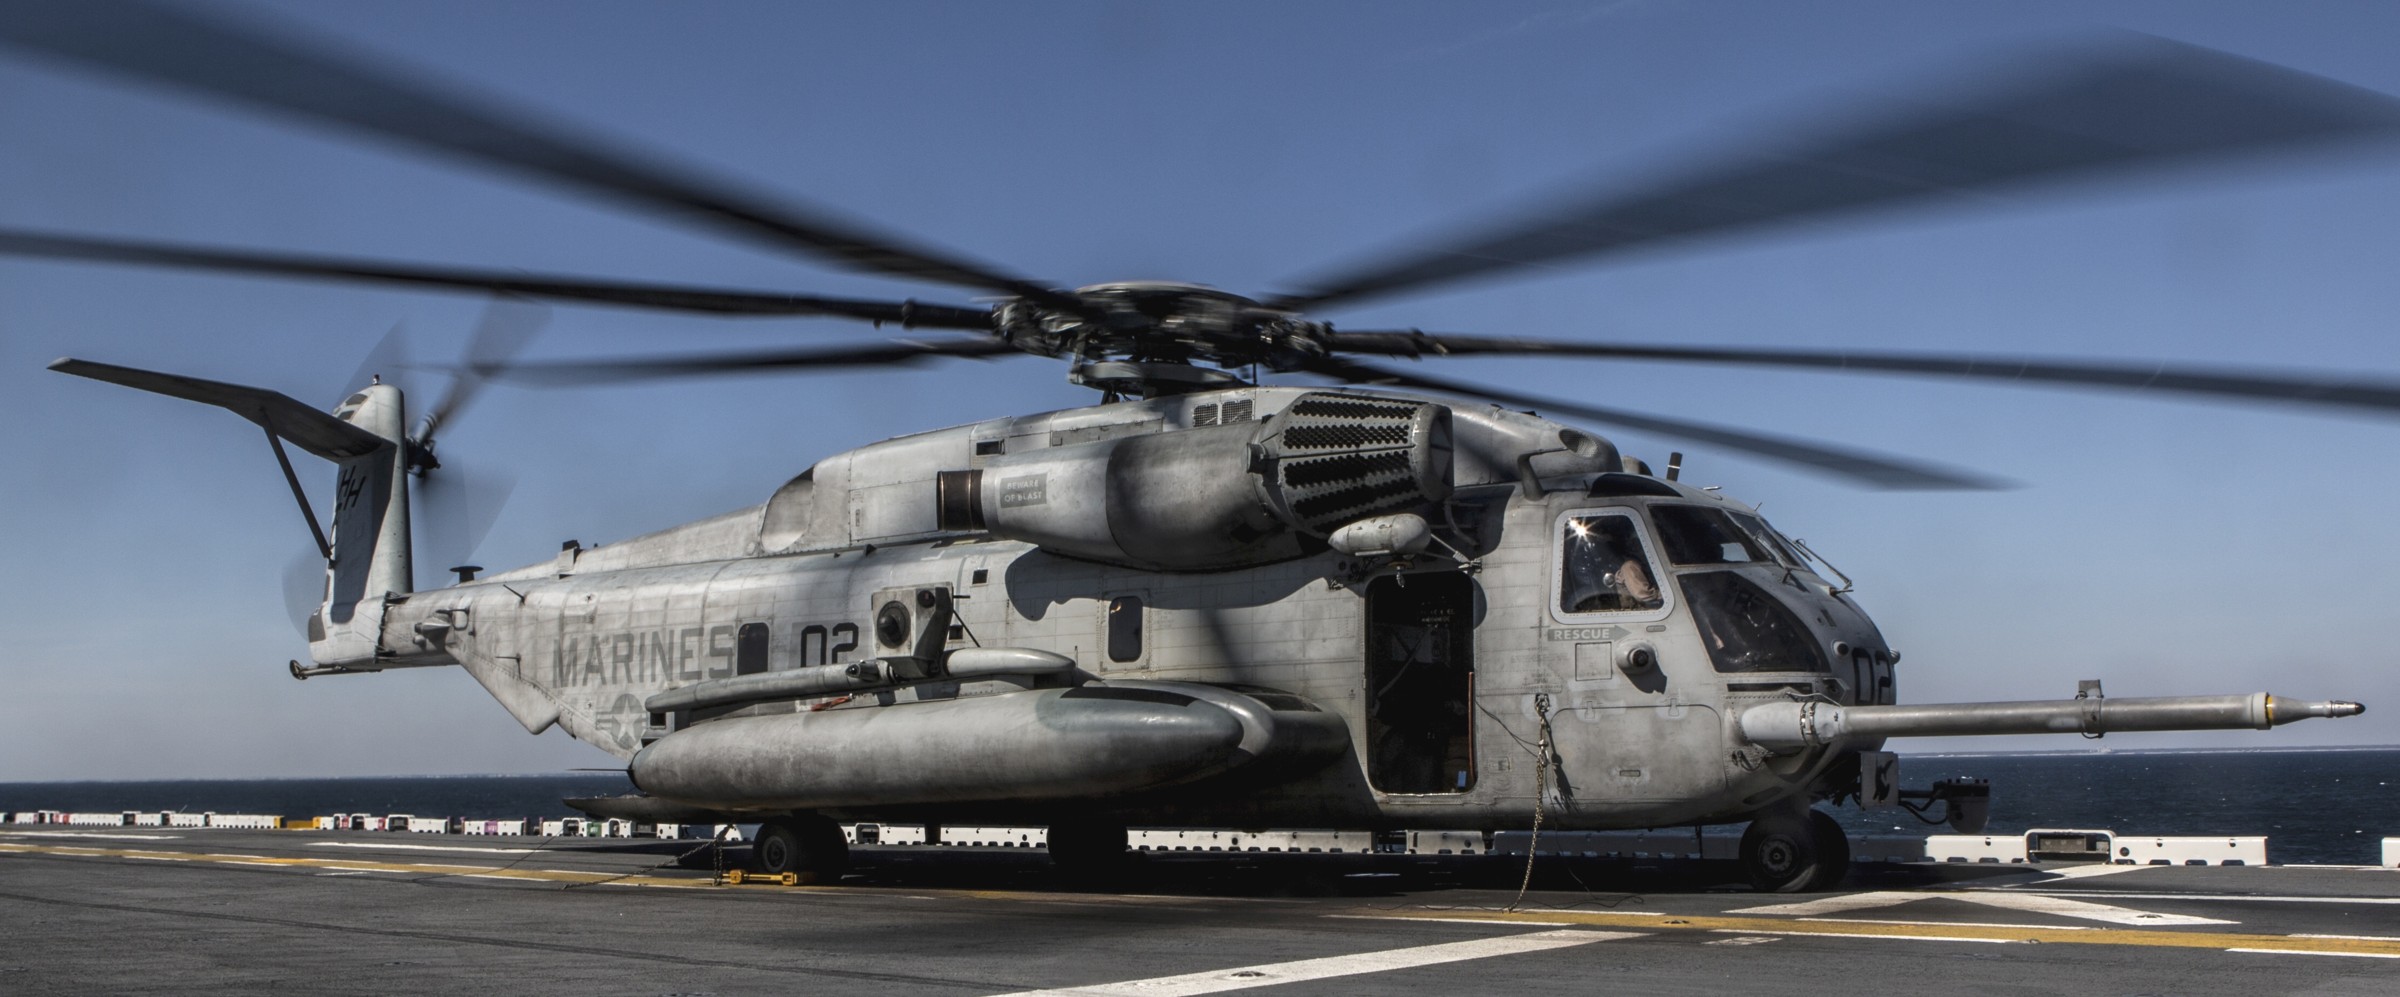 hmh-366 hammerheads marine heavy helicopter squadron usmc sikorsky ch-53e super stallion 35 exercise bold alligator 2014